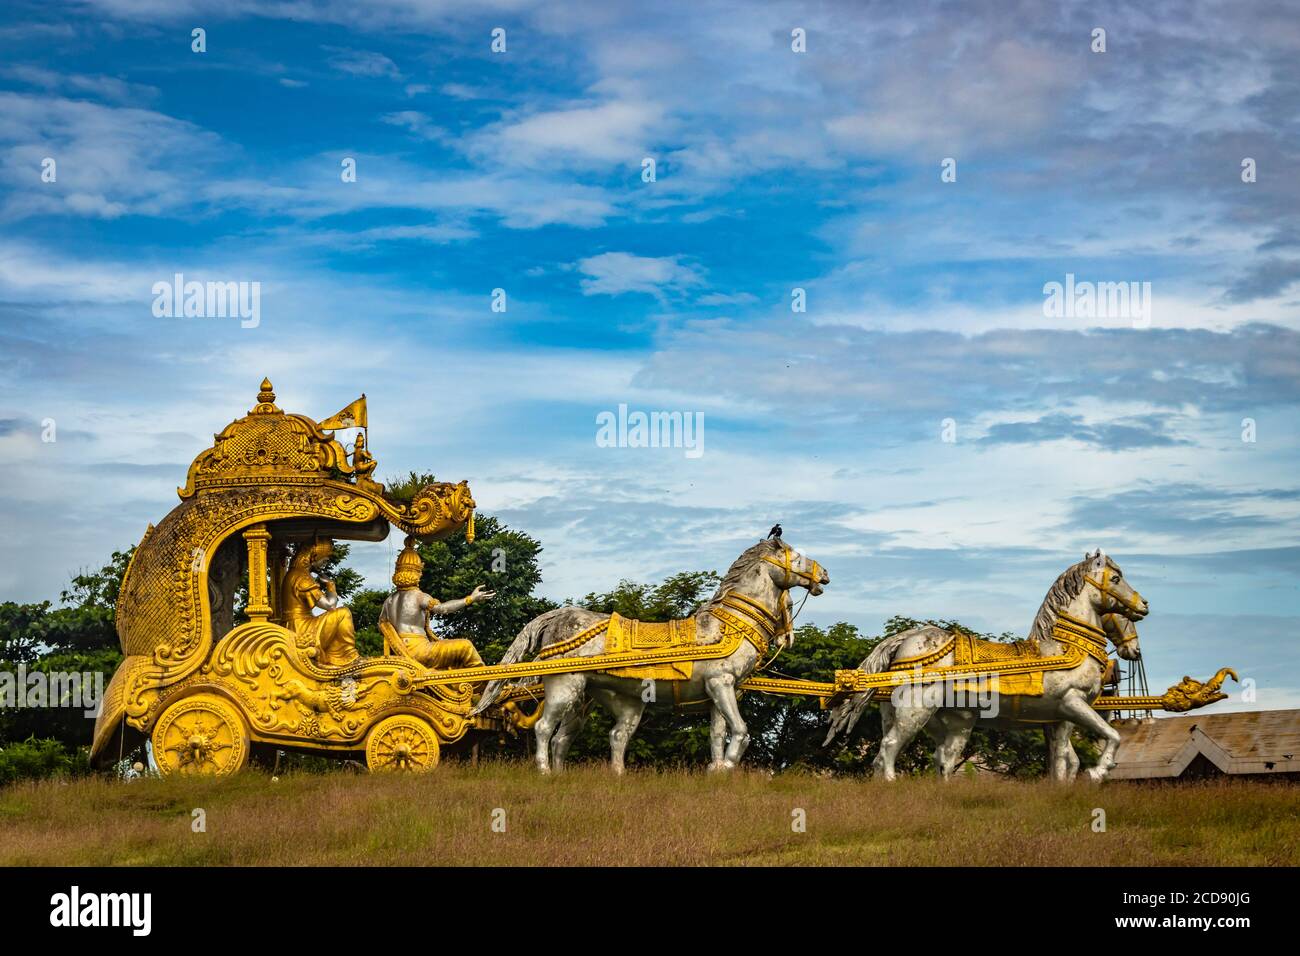 holly Arjuna chariot of Mahabharata in golden color with amazing sky background image is taken at murdeshwar karnataka india. Stock Photo